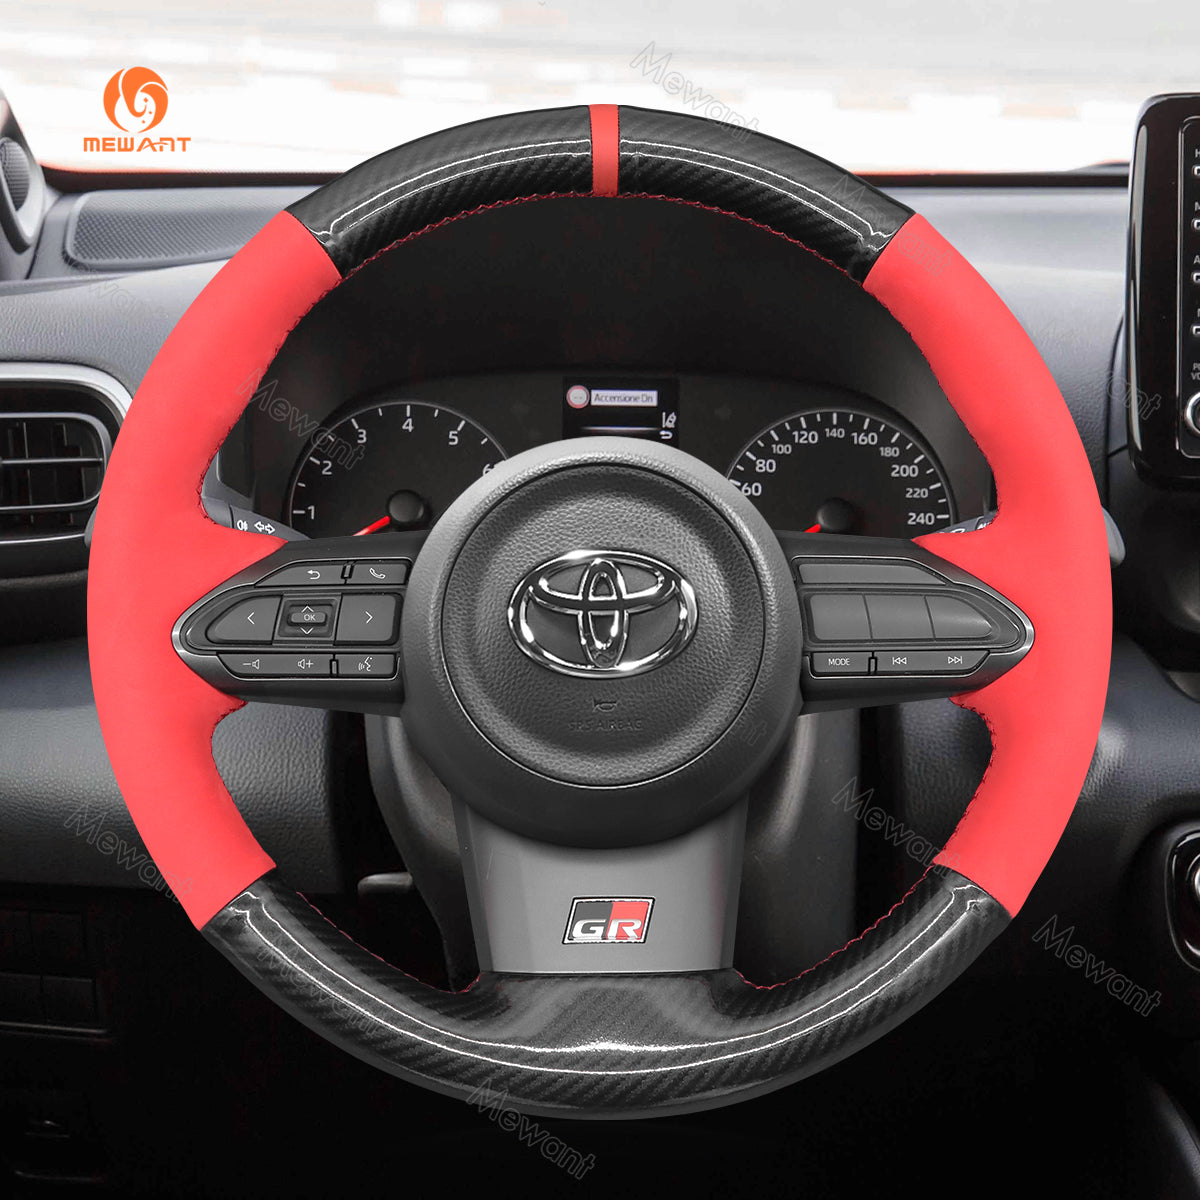 MEWANT Hand Stitch Car Steering Wheel Cover for Toyota Yaris Vitz